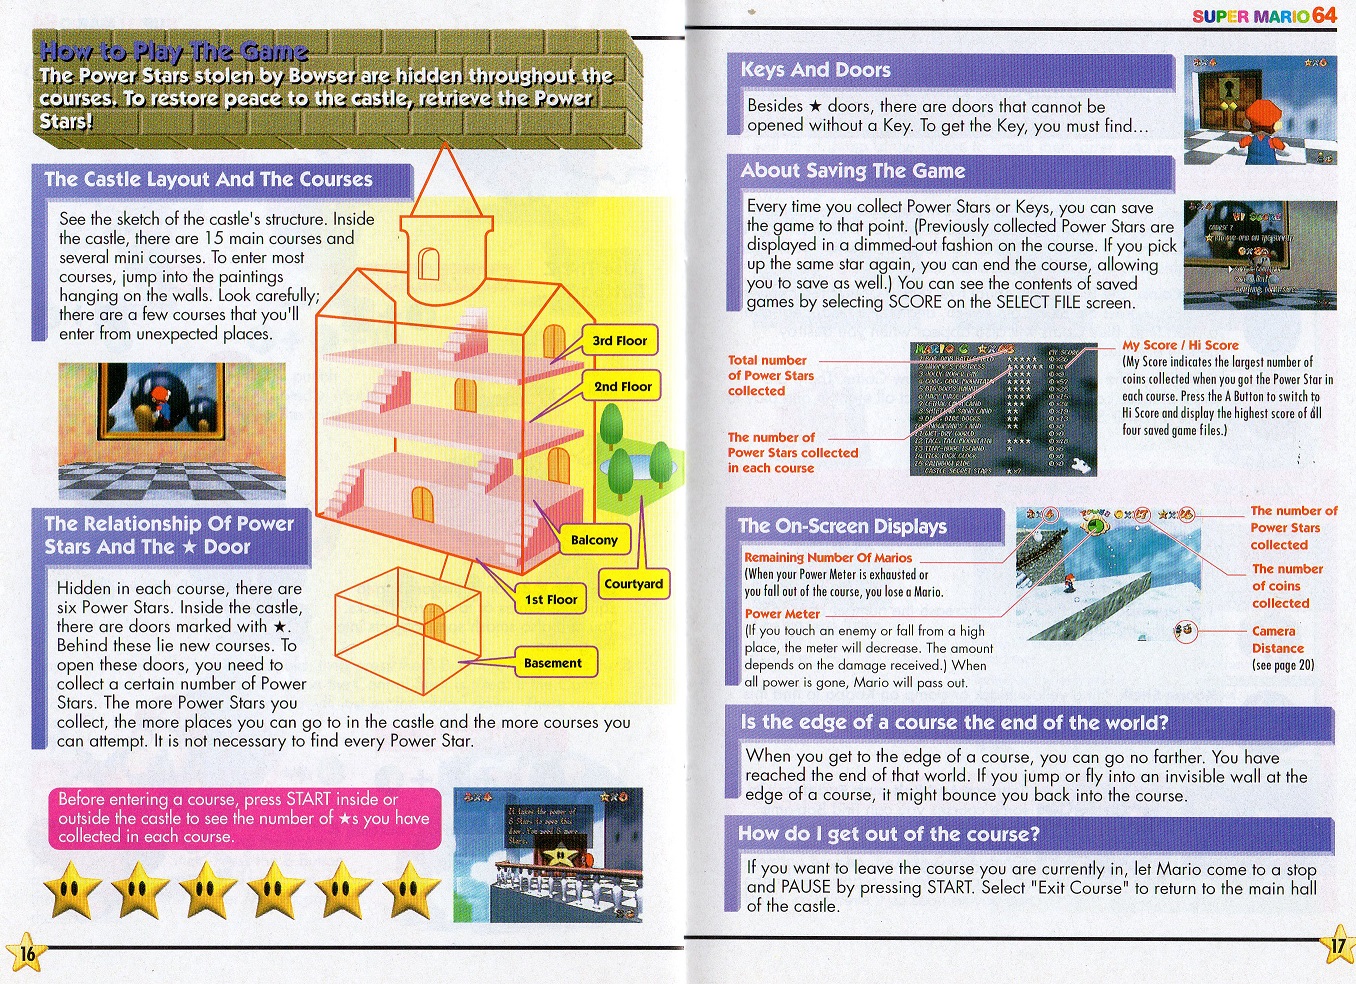 Super Mario 64 manual page 16 and 17